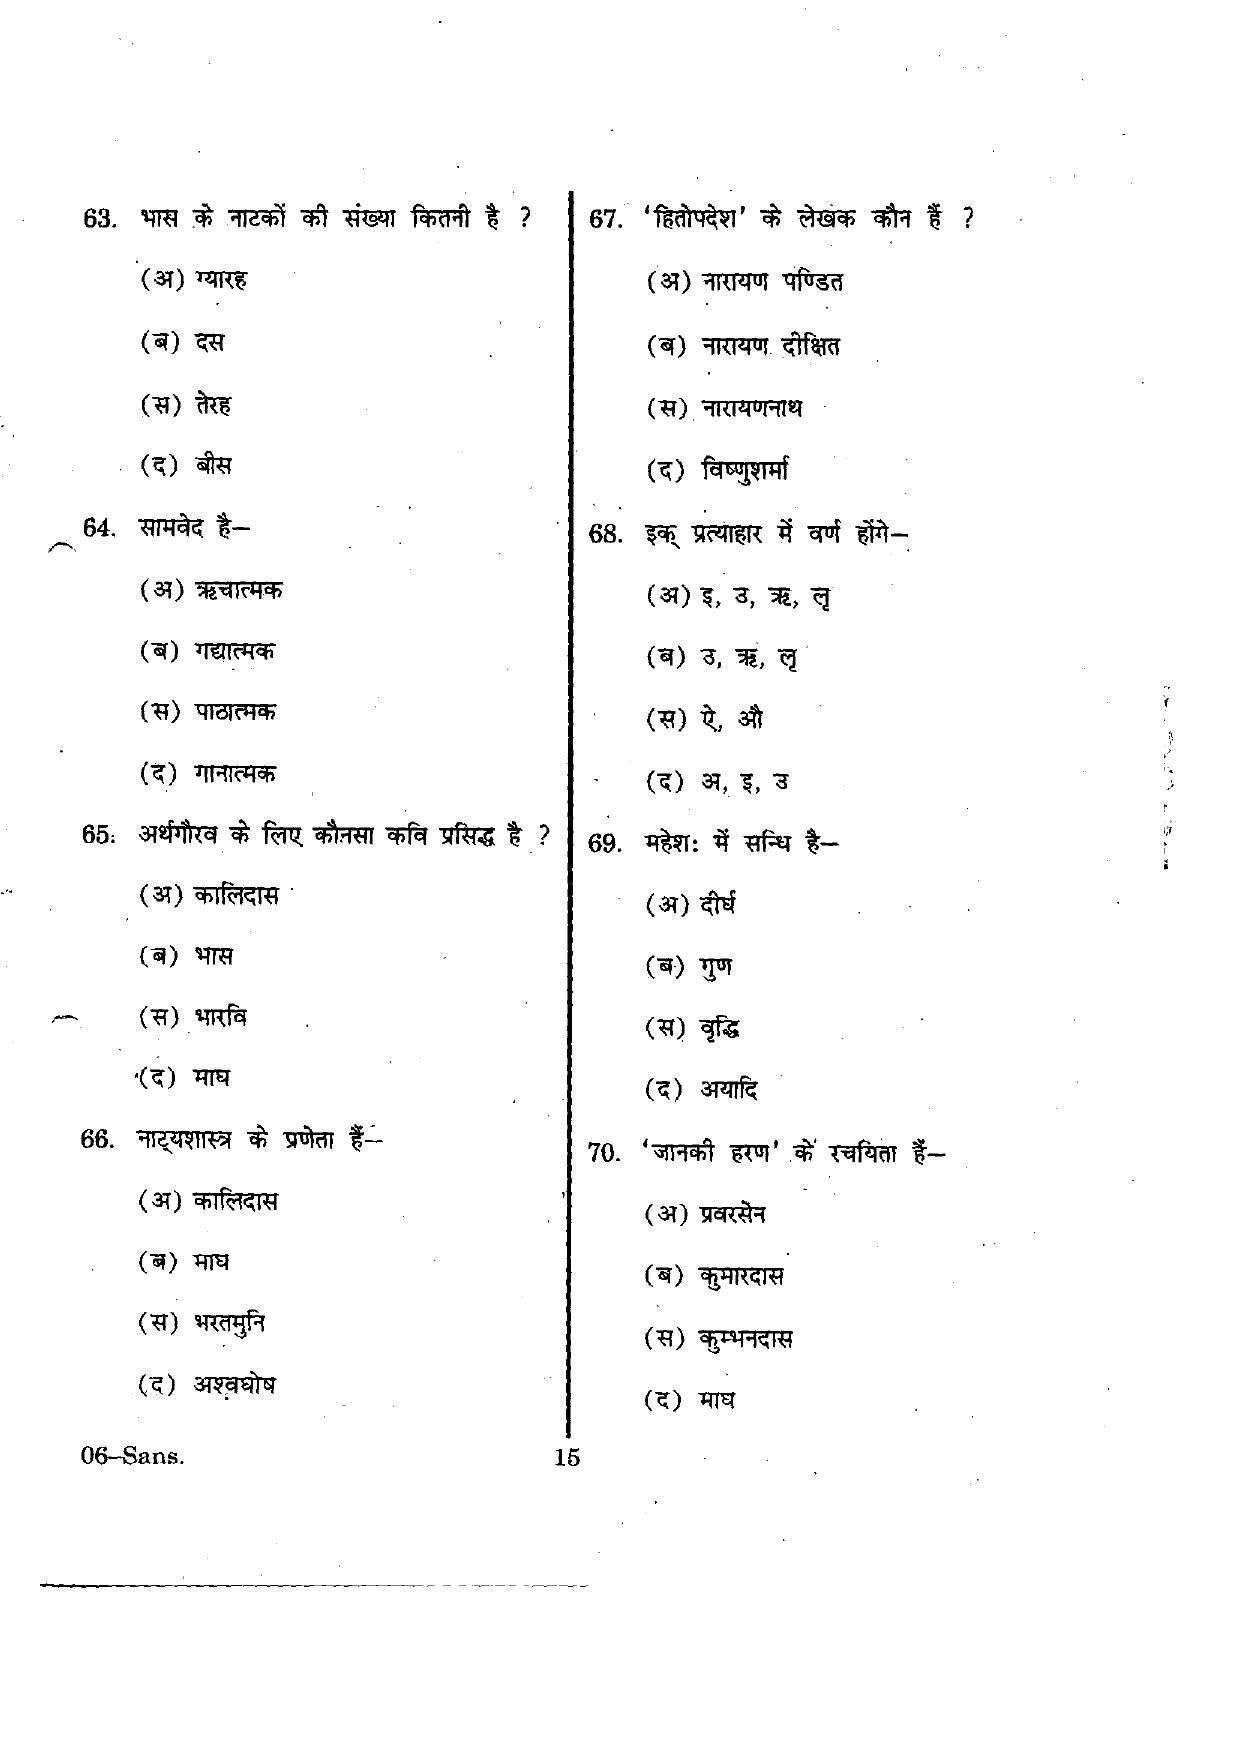 URATPG Sanskrit 2012 Question Paper - Page 15